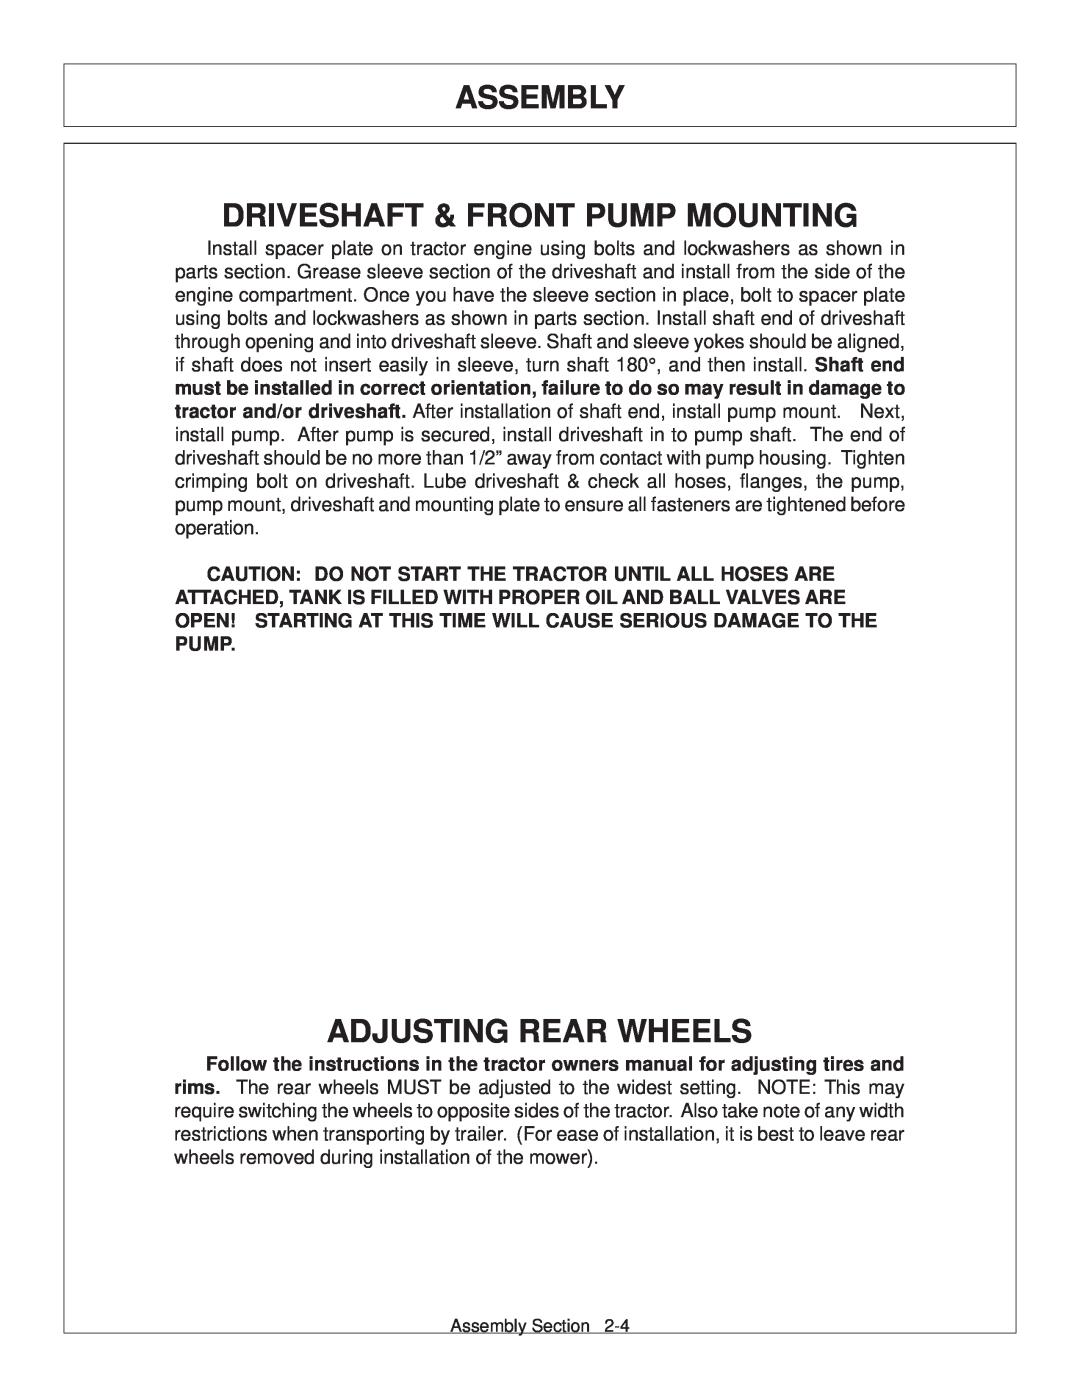 Tiger JD 62-6420 manual Driveshaft & Front Pump Mounting, Adjusting Rear Wheels, Assembly 